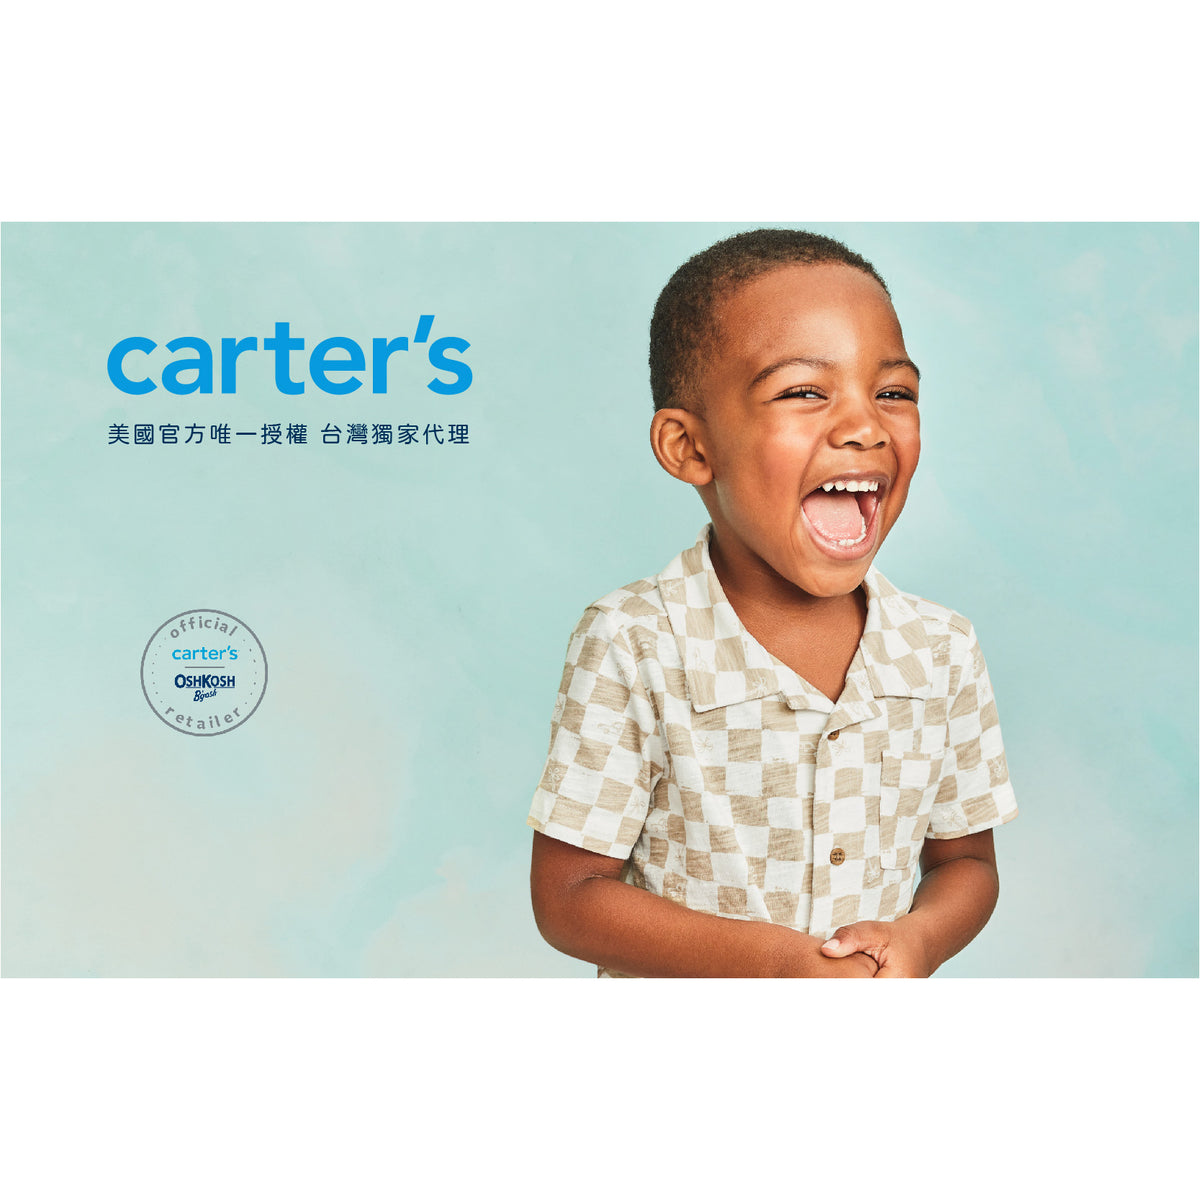 Carter's 大理石灰高領上衣(2T-5T)